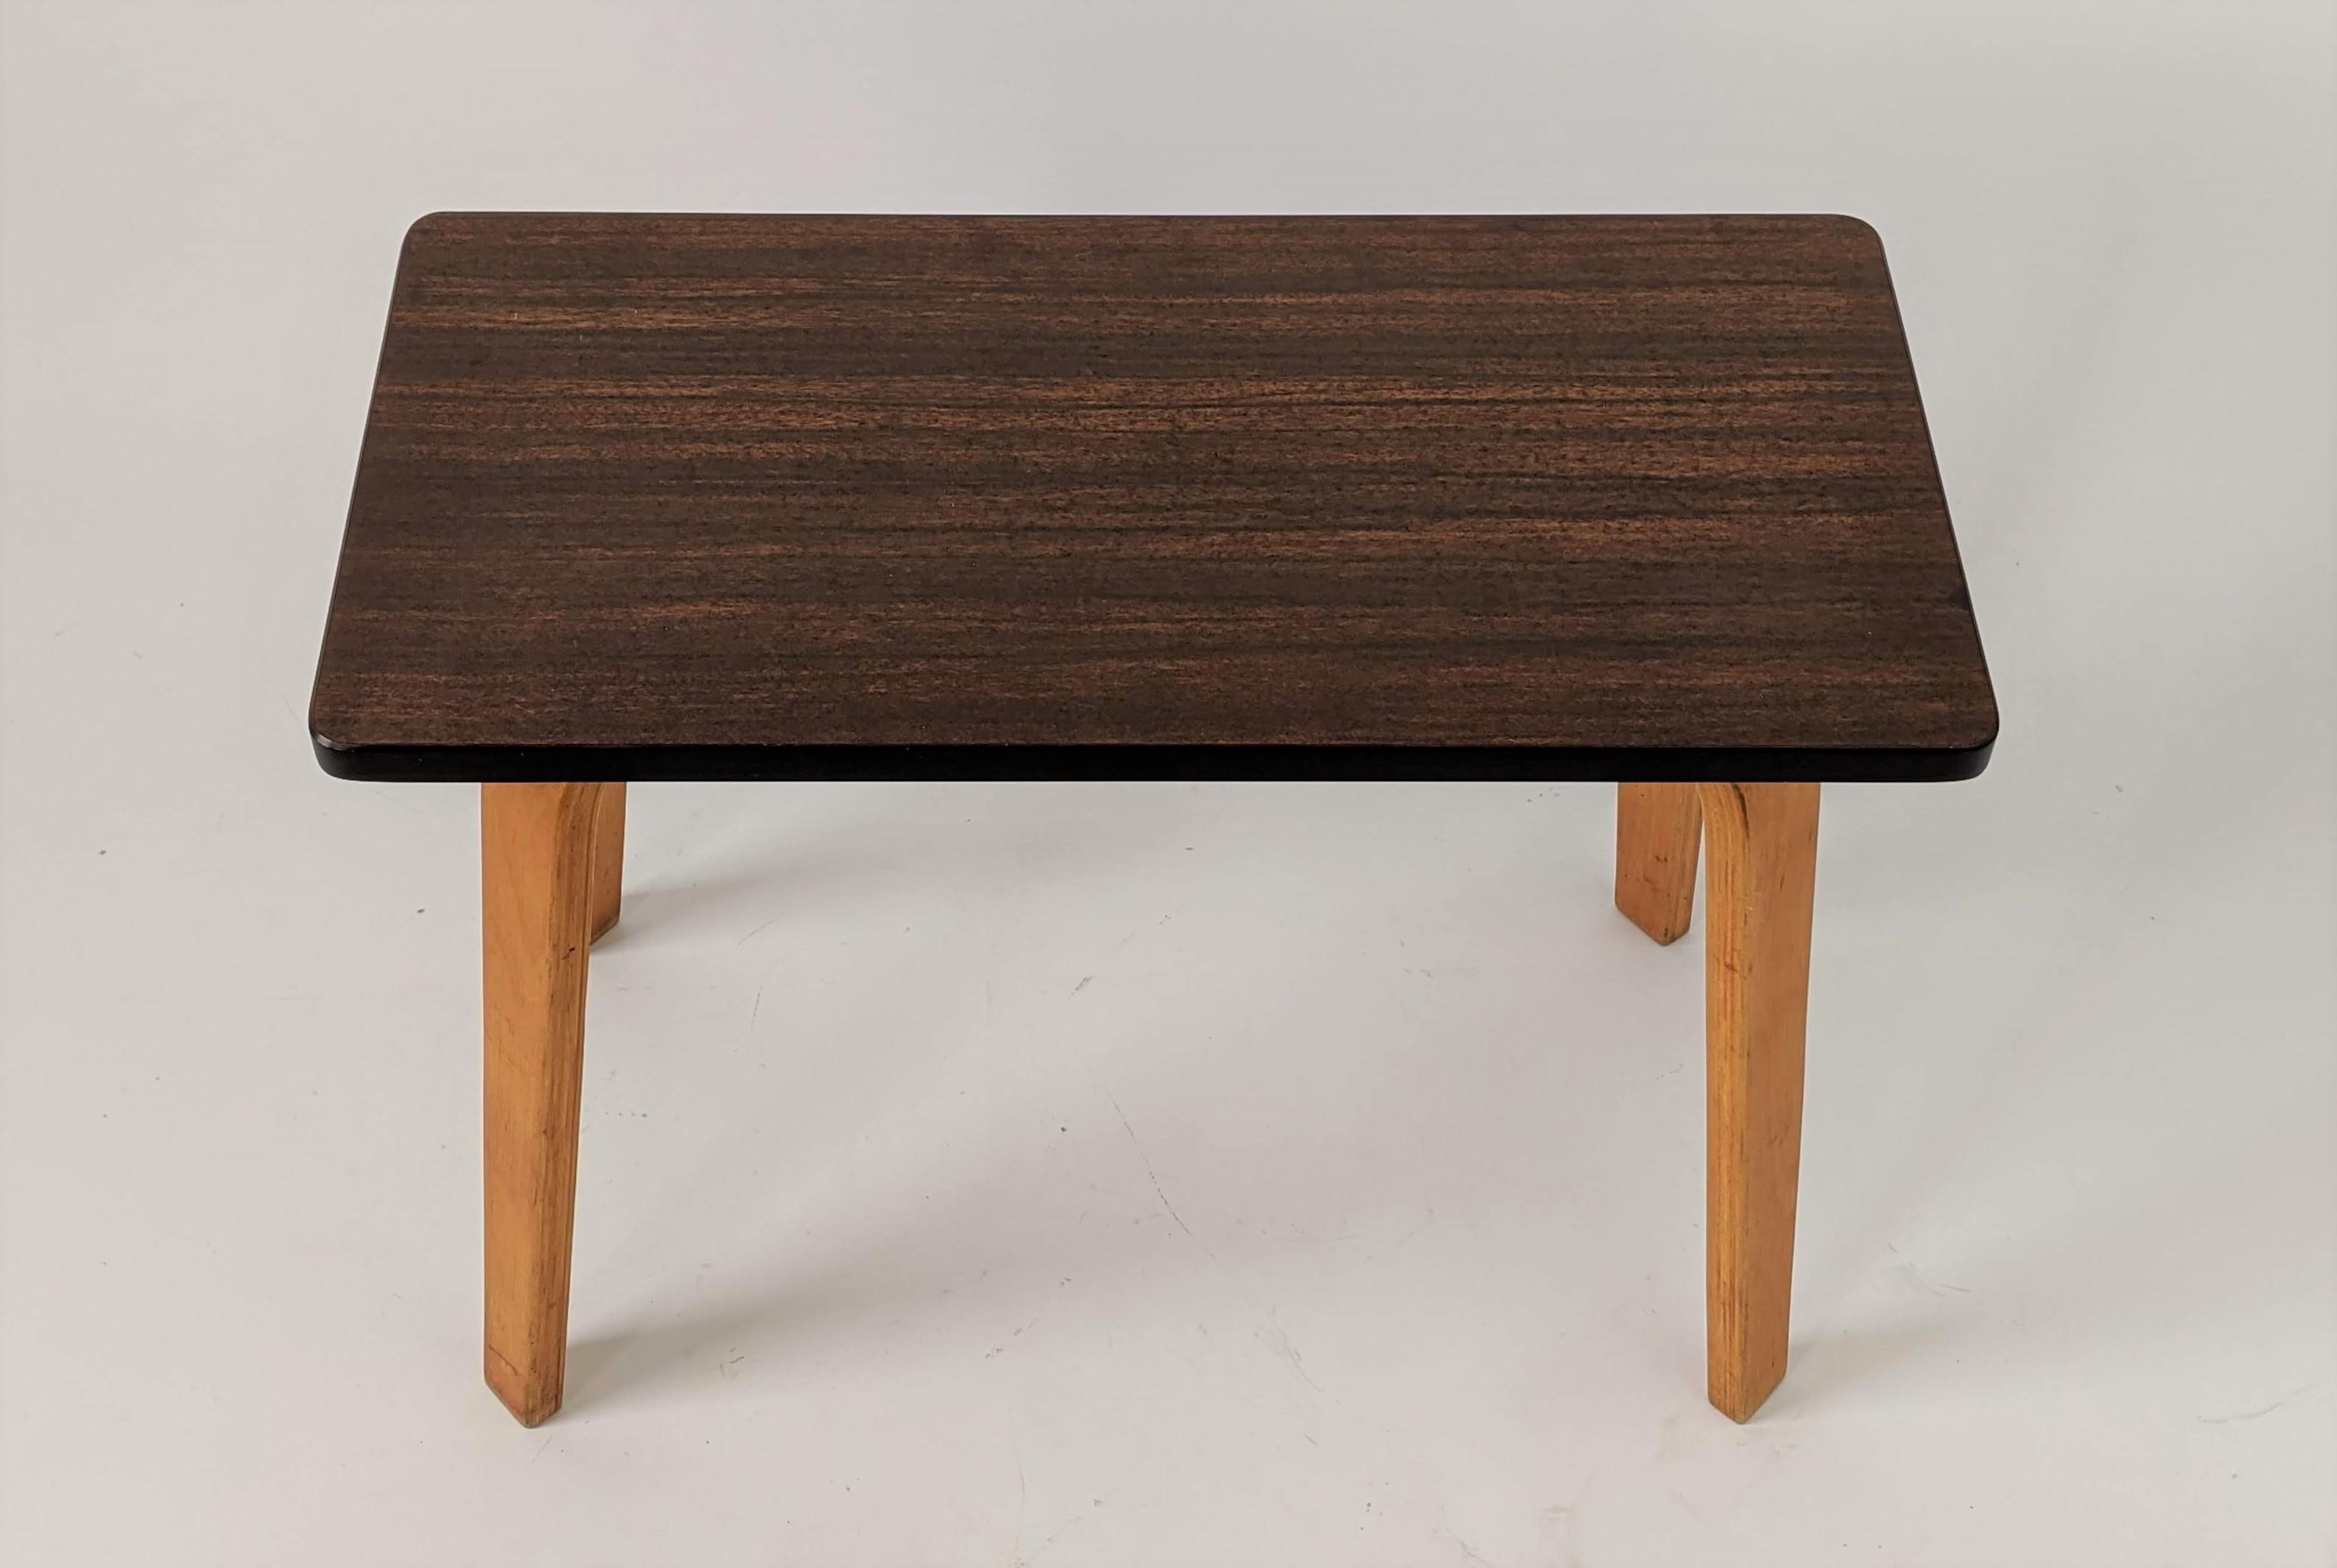 bent wood table legs